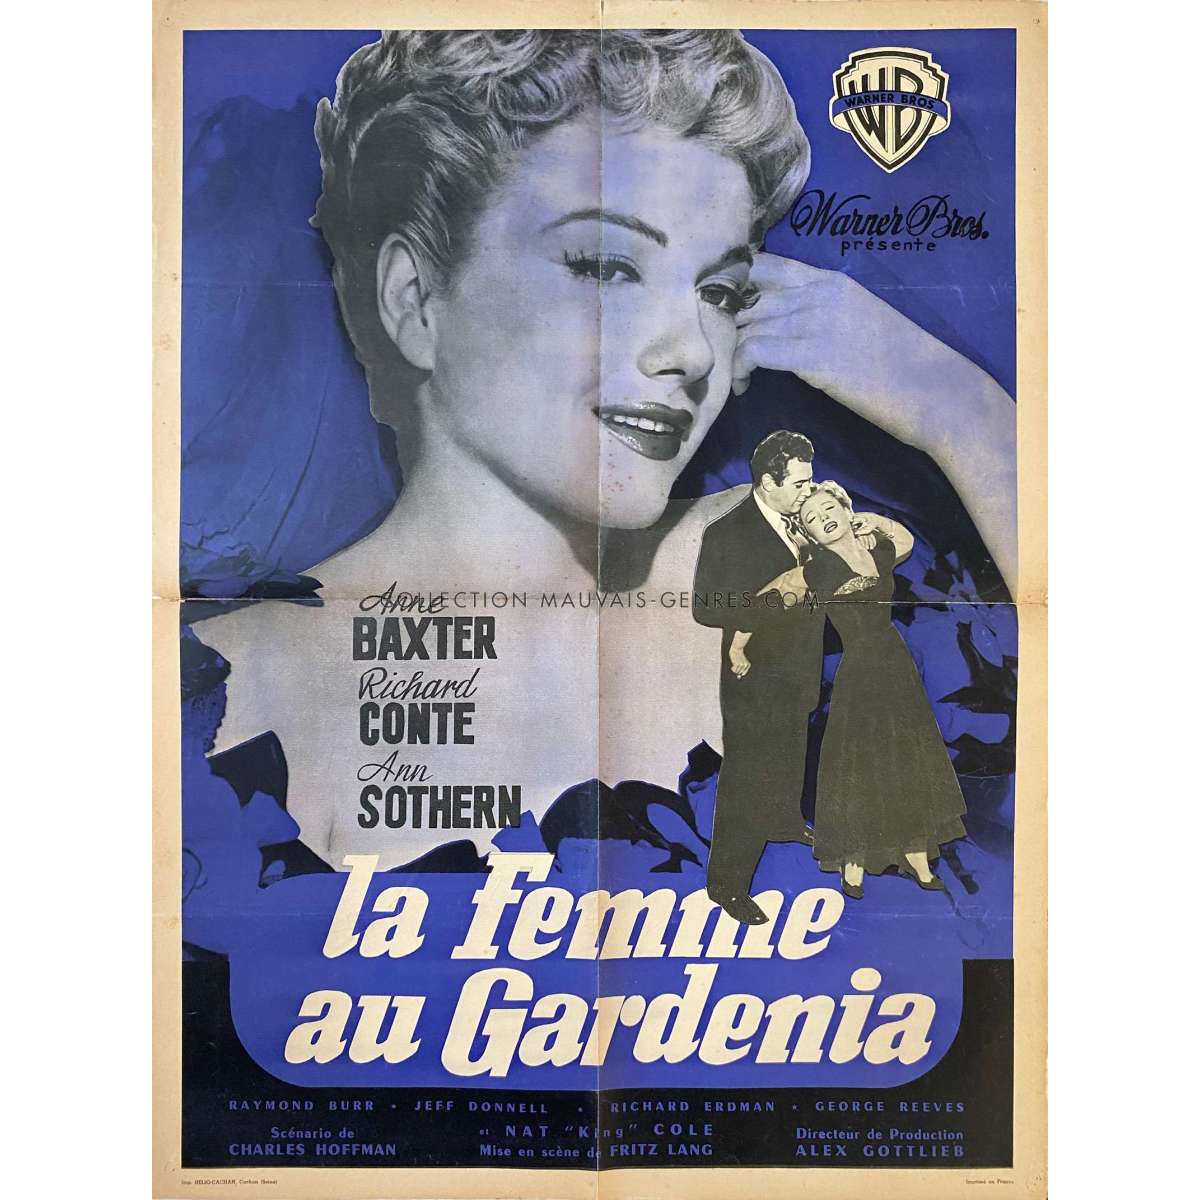 Film Noir Movie Poster Inganno Poster